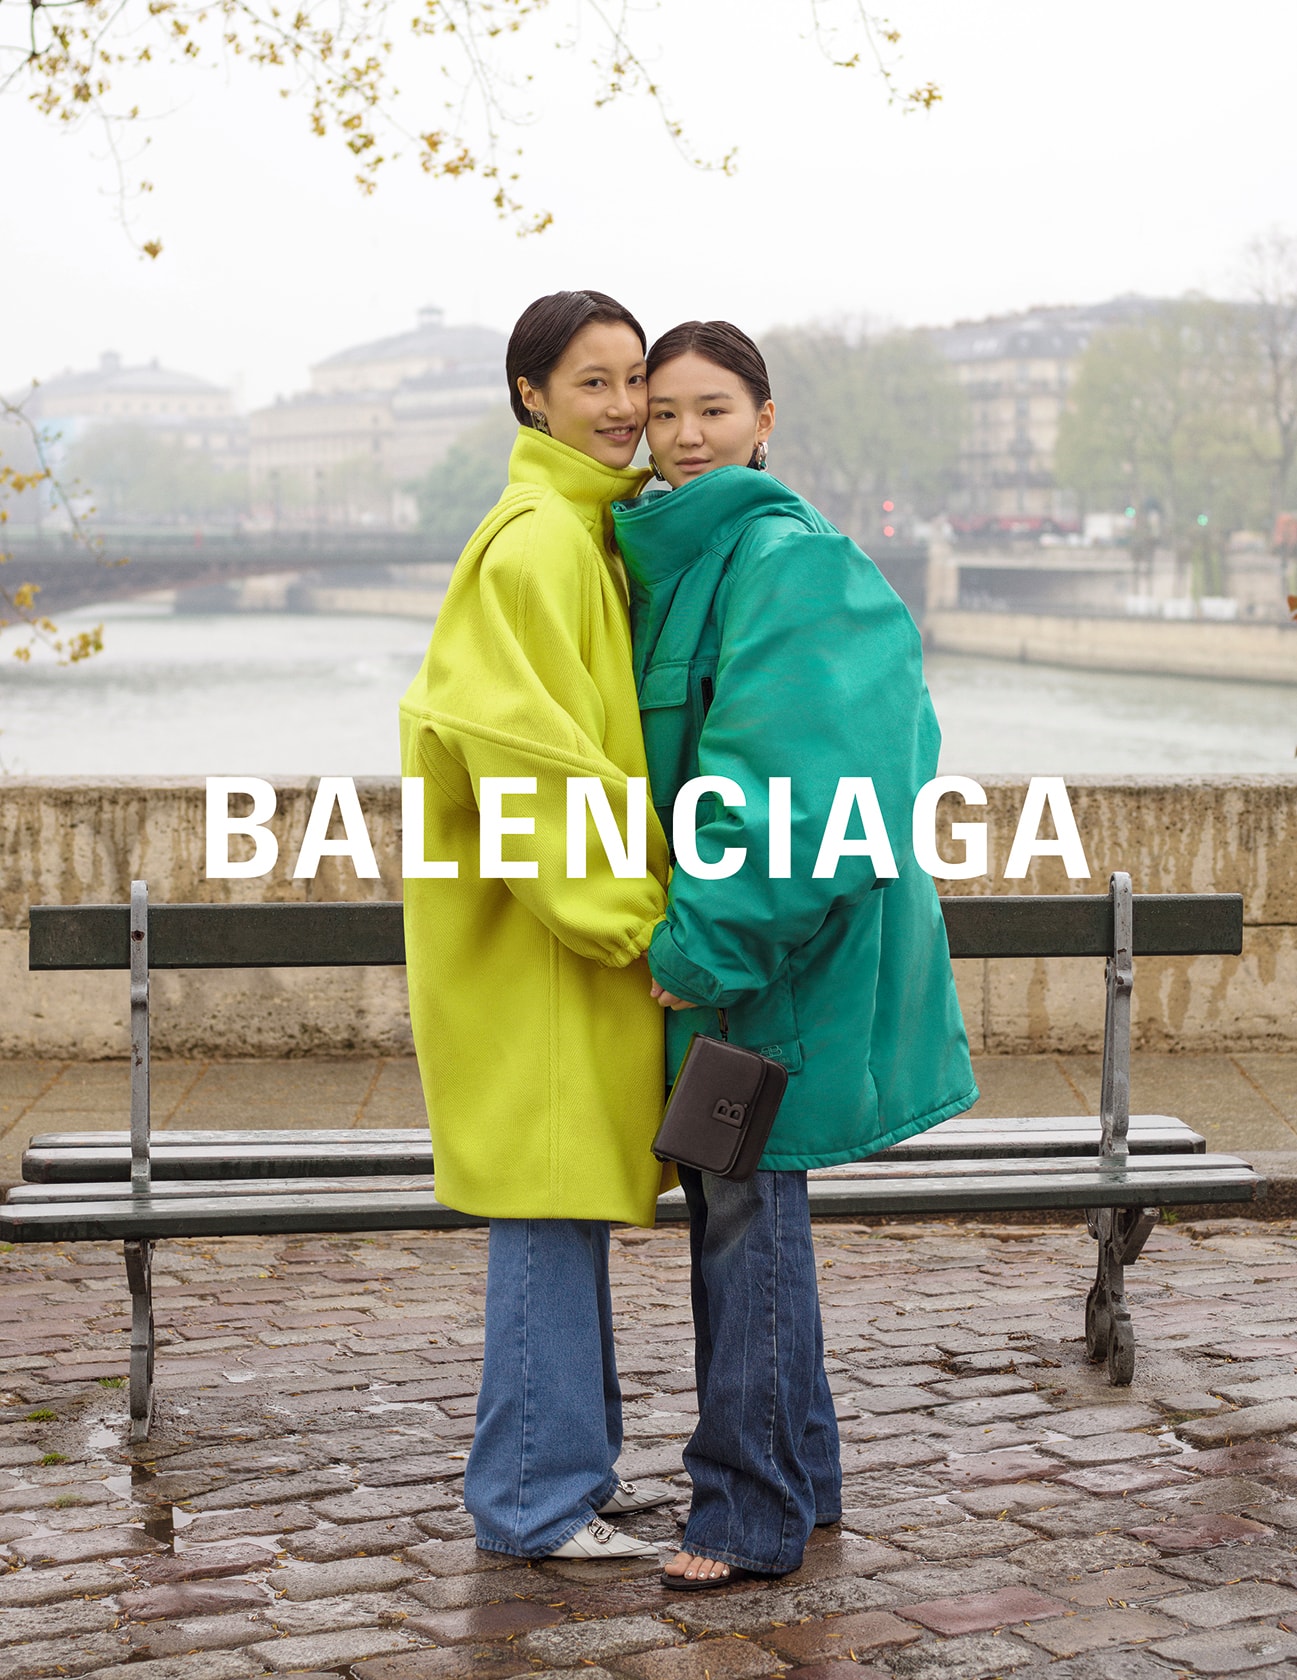 balenciaga winter campaign photos couple yellow coat teal jacket jeans